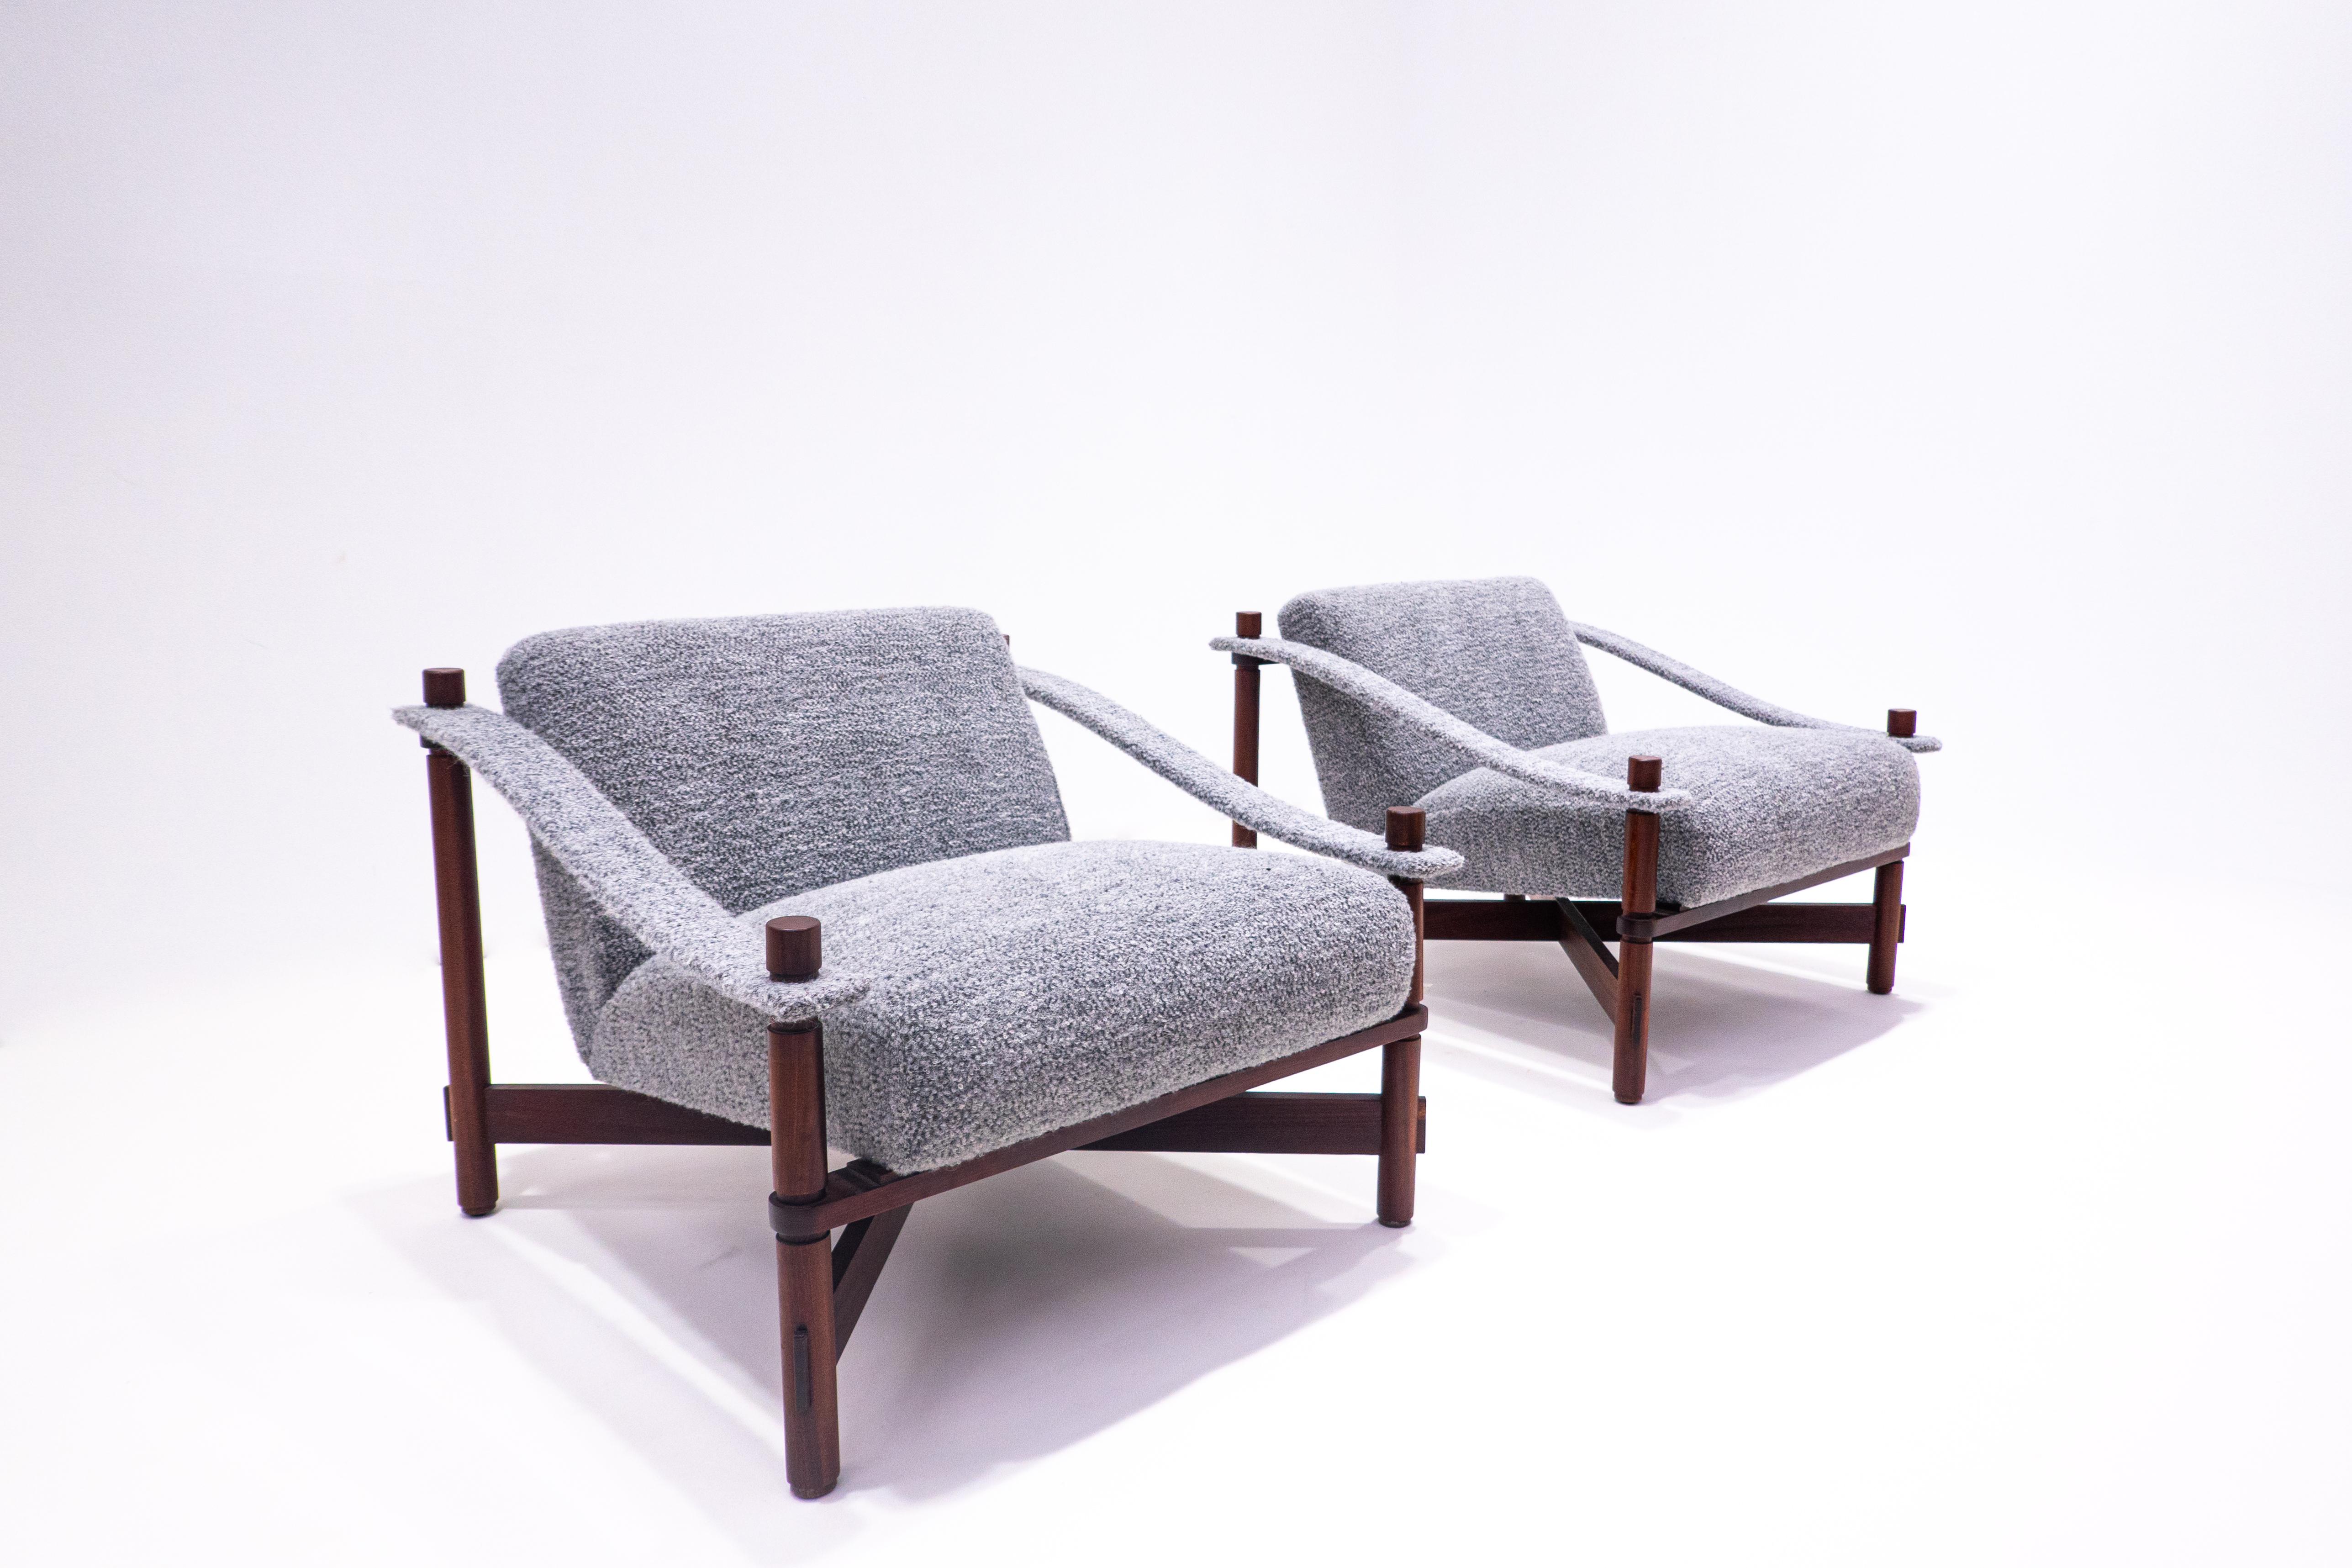 Pair of mid-century armchairs by Raffaella Crespi, Italy, 1960s.
    